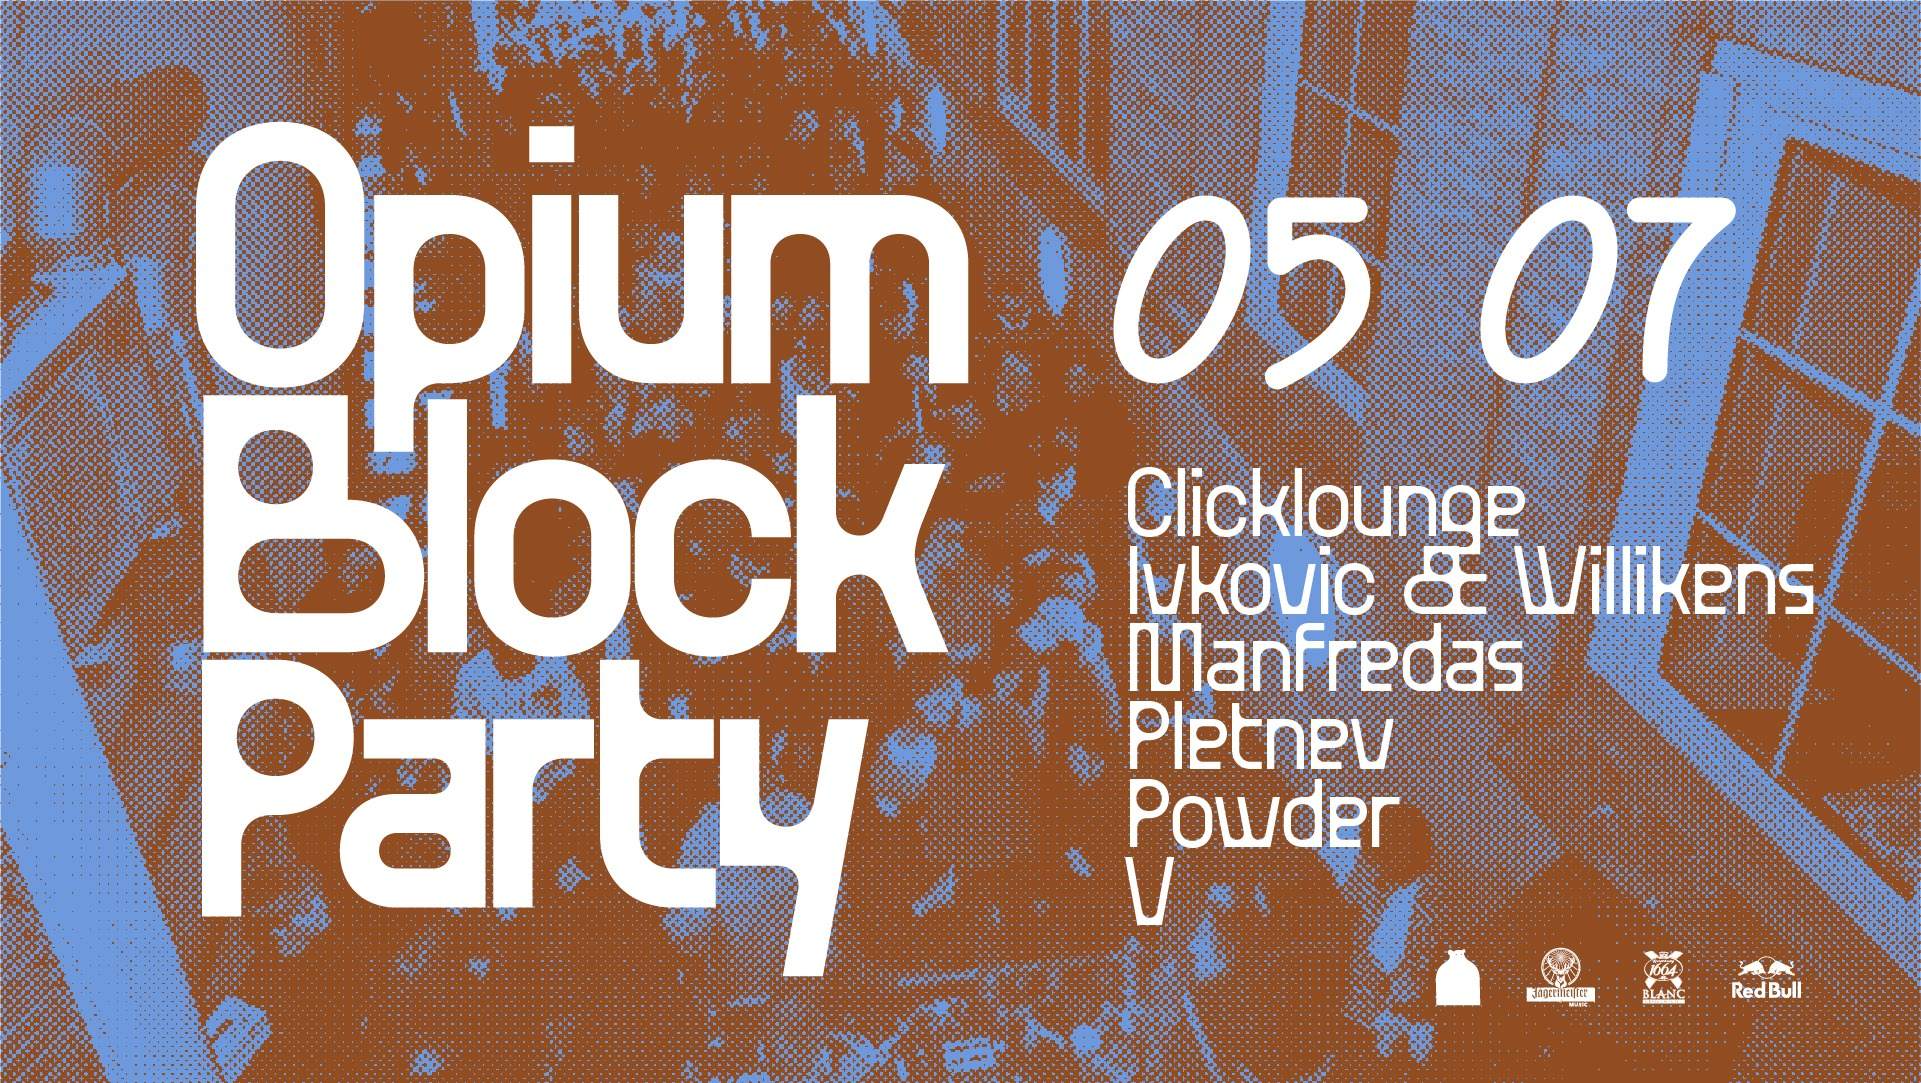 Opium Block Party: IVkoVic & Willikens, Powder - フライヤー表